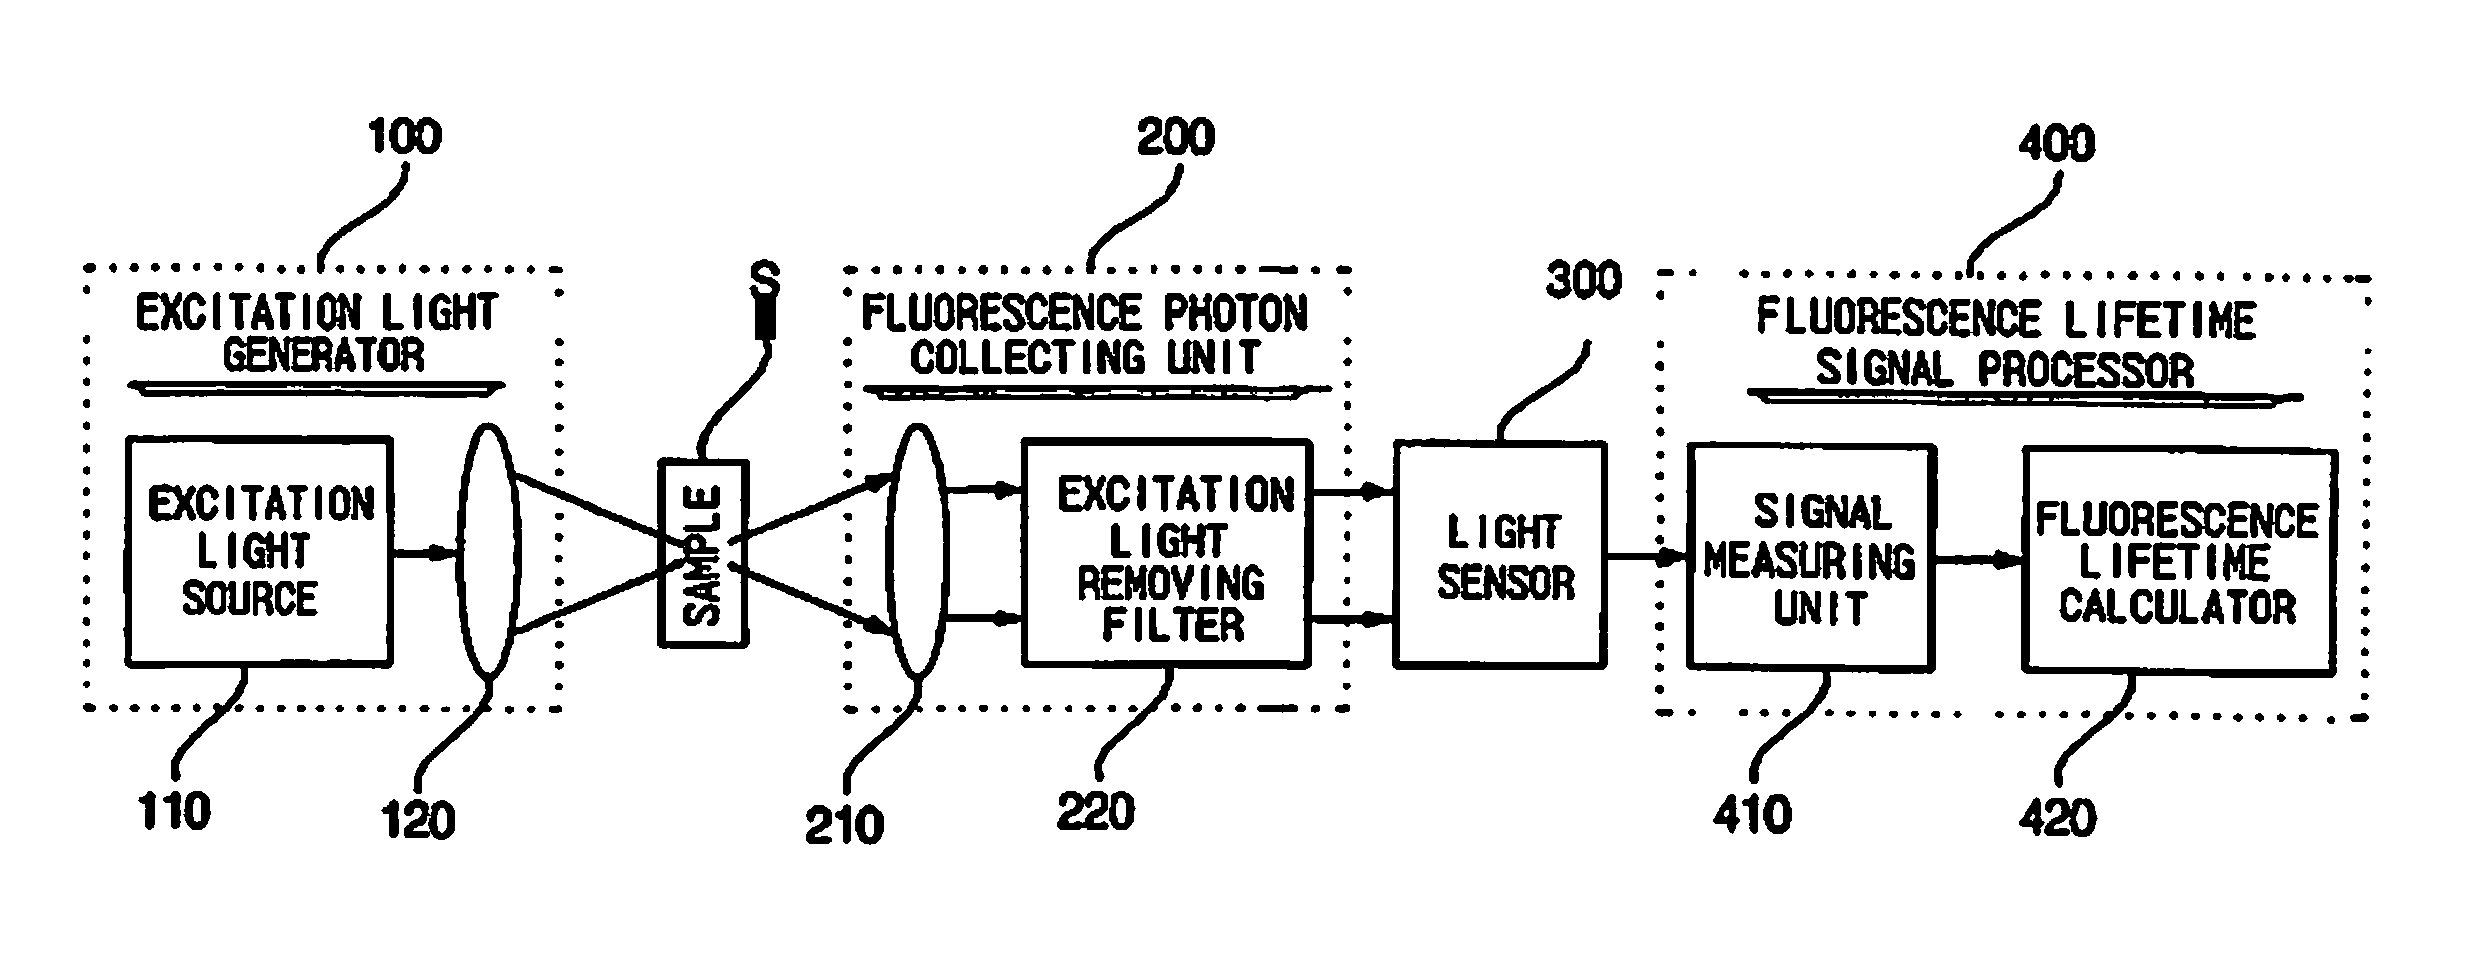 Apparatus for measuring fluorescence lifetime